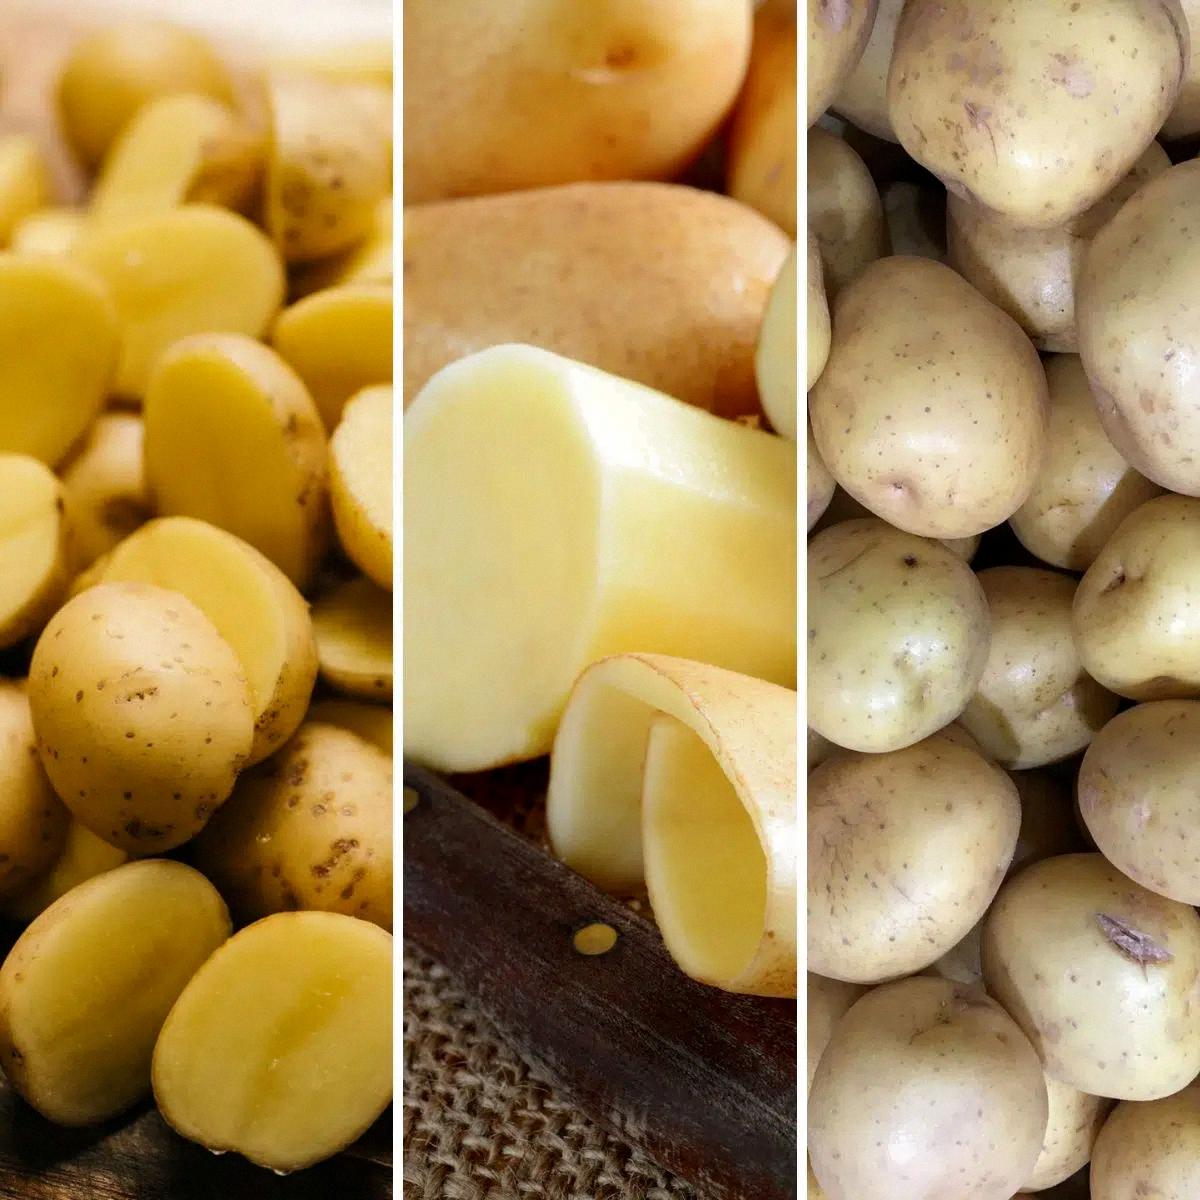 are yellow potatoes the same as yukon gold